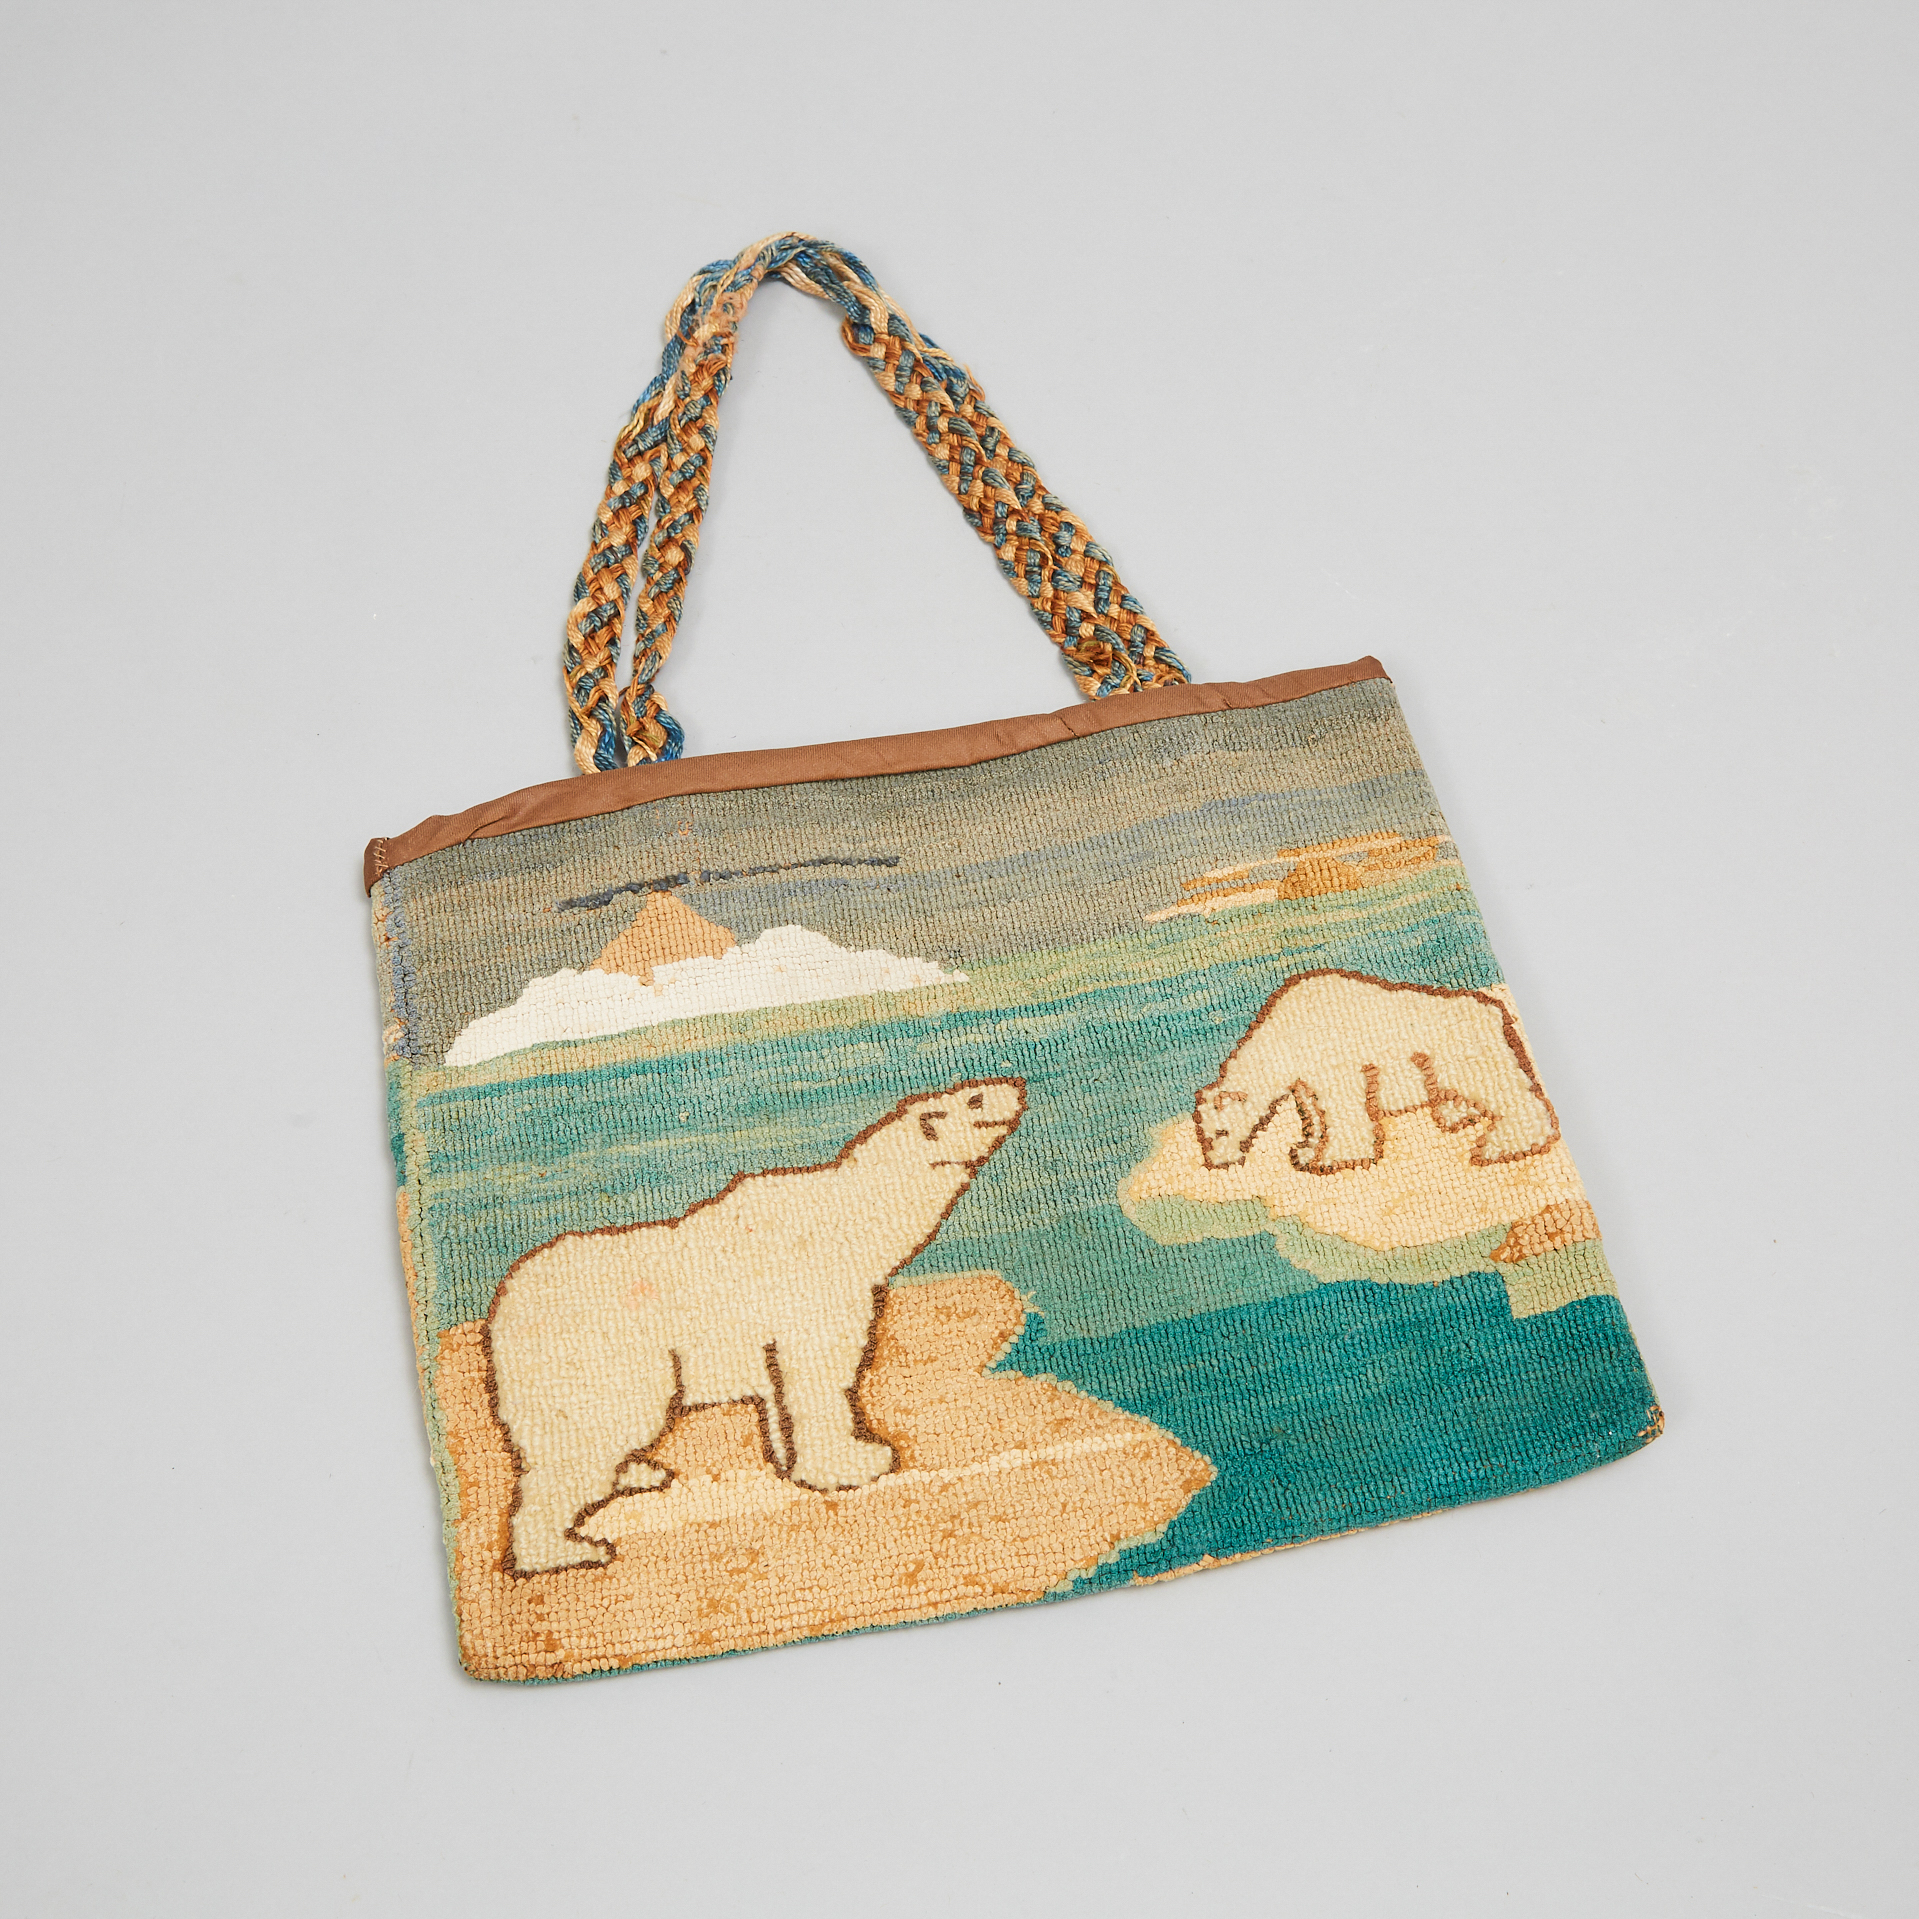 Grenfell Labrador Industries 'Polar Bears on Ice Flow' Hooked Handbag, c.1930